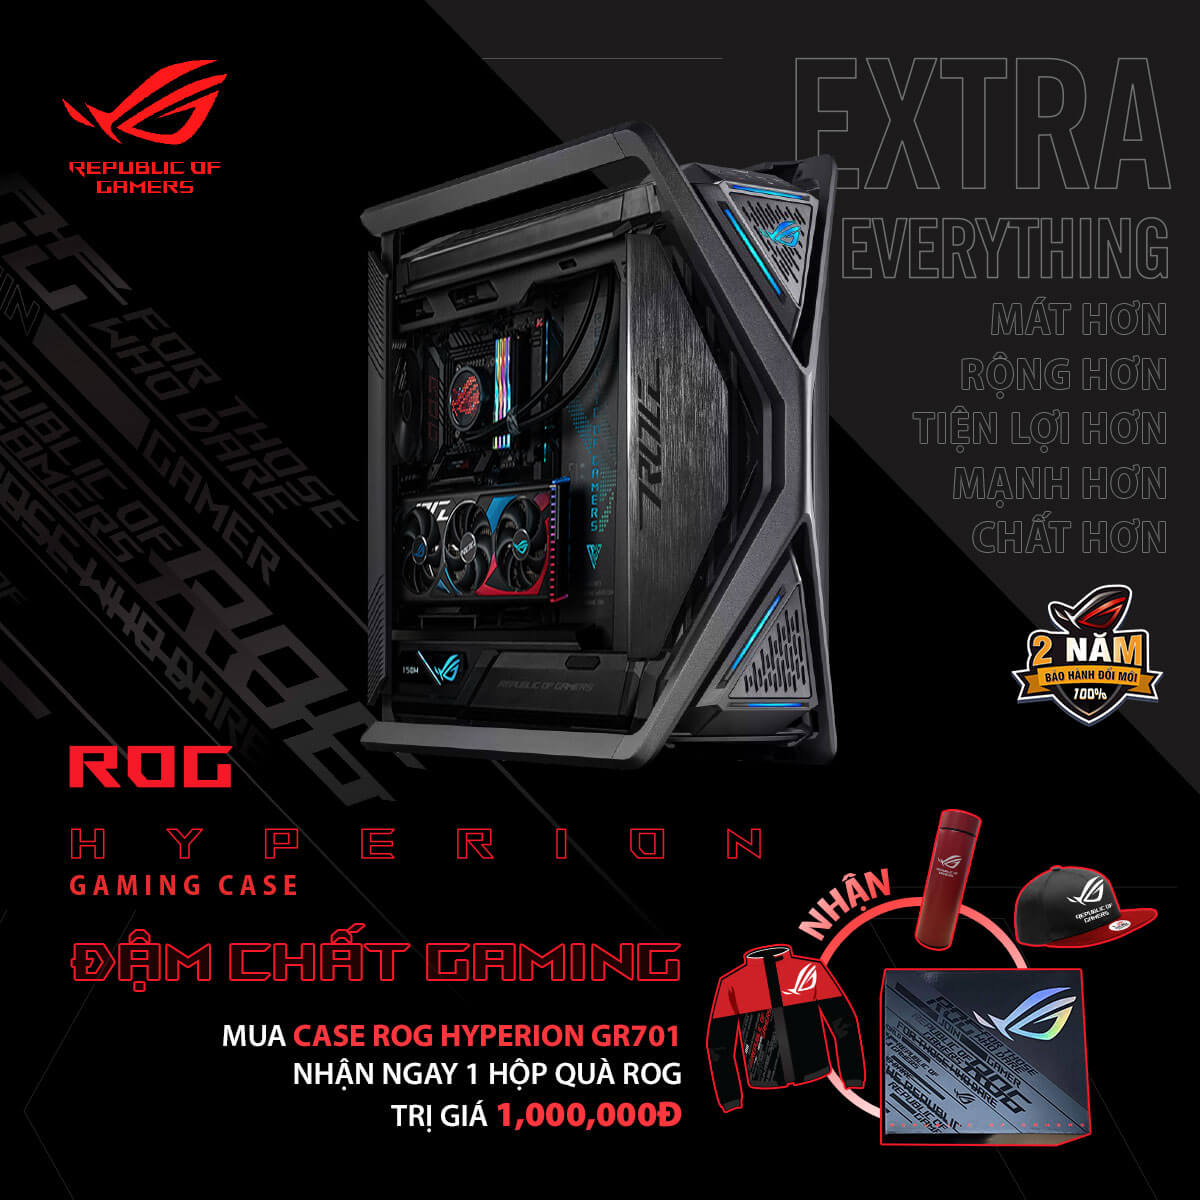 ROG case Hyerion get gift box 1200x1200 1